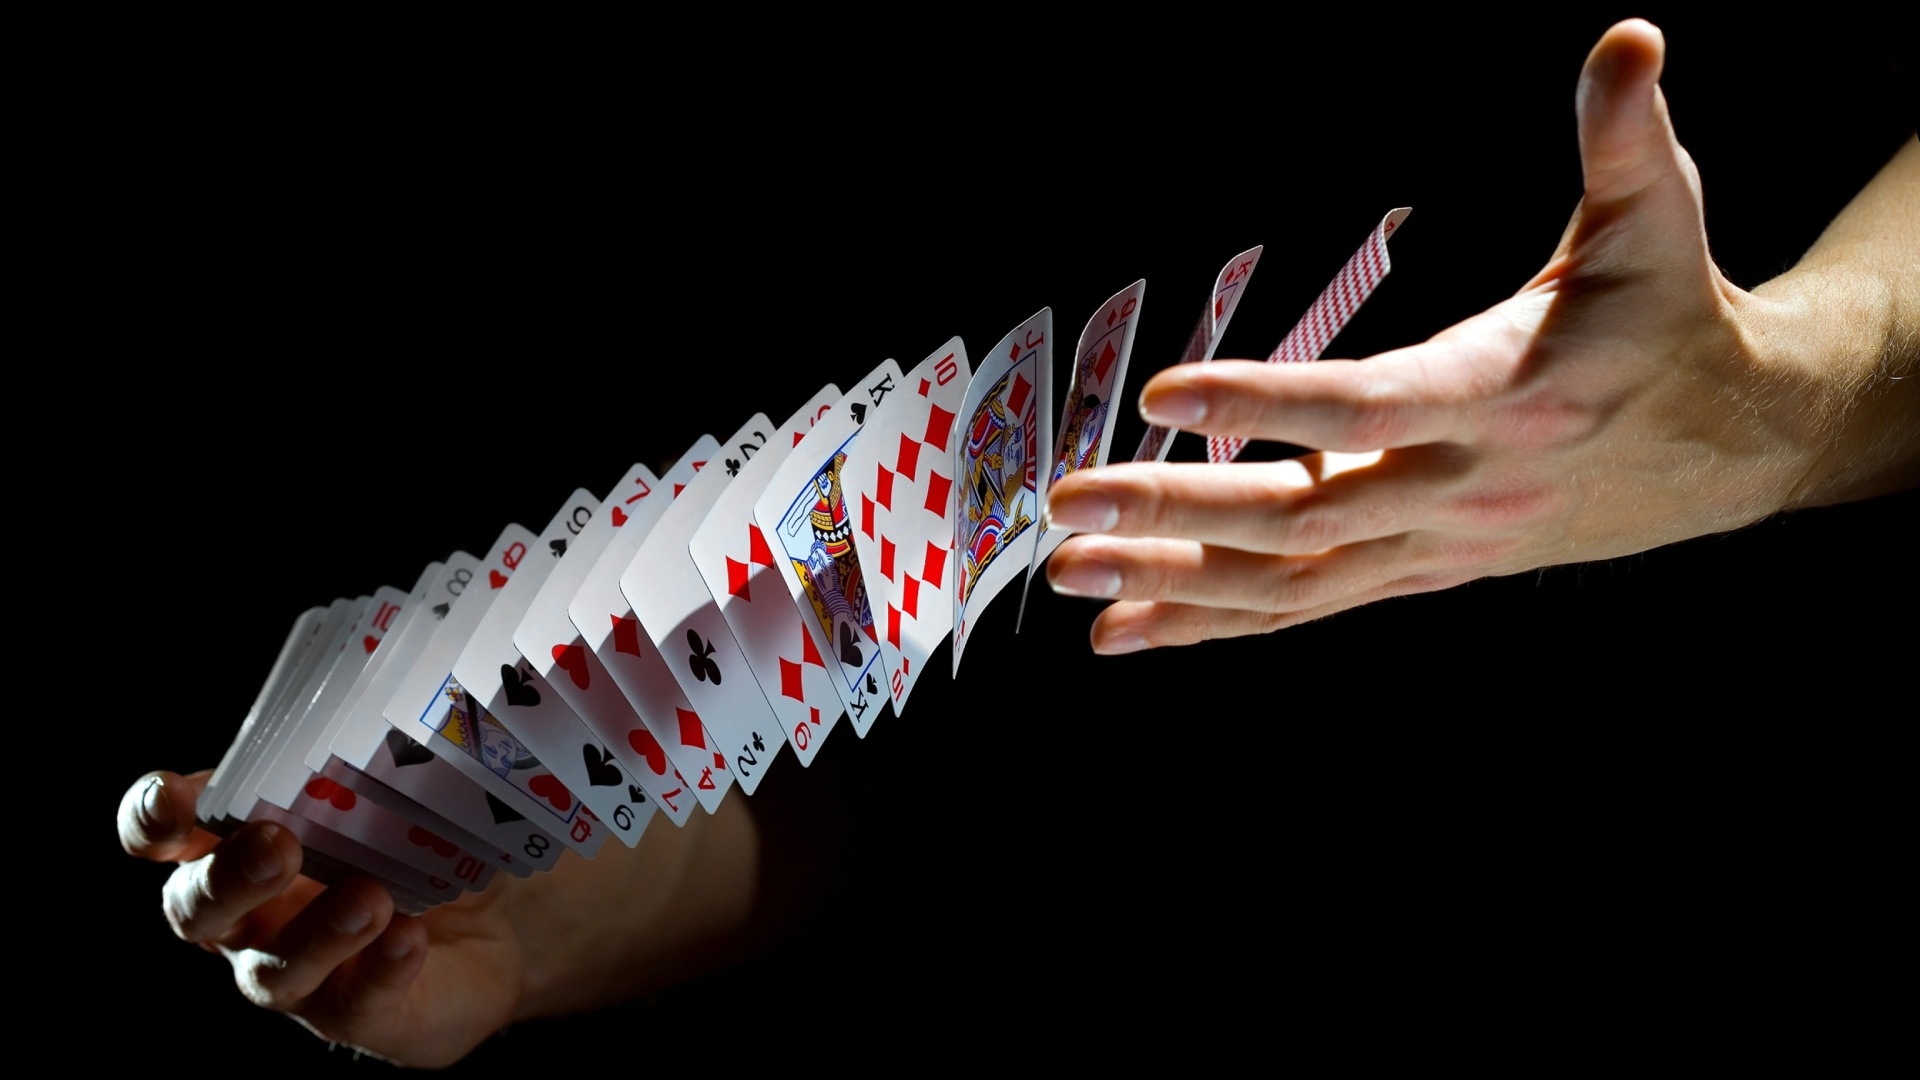 Das Playing cards trick Wallpaper 1920x1080